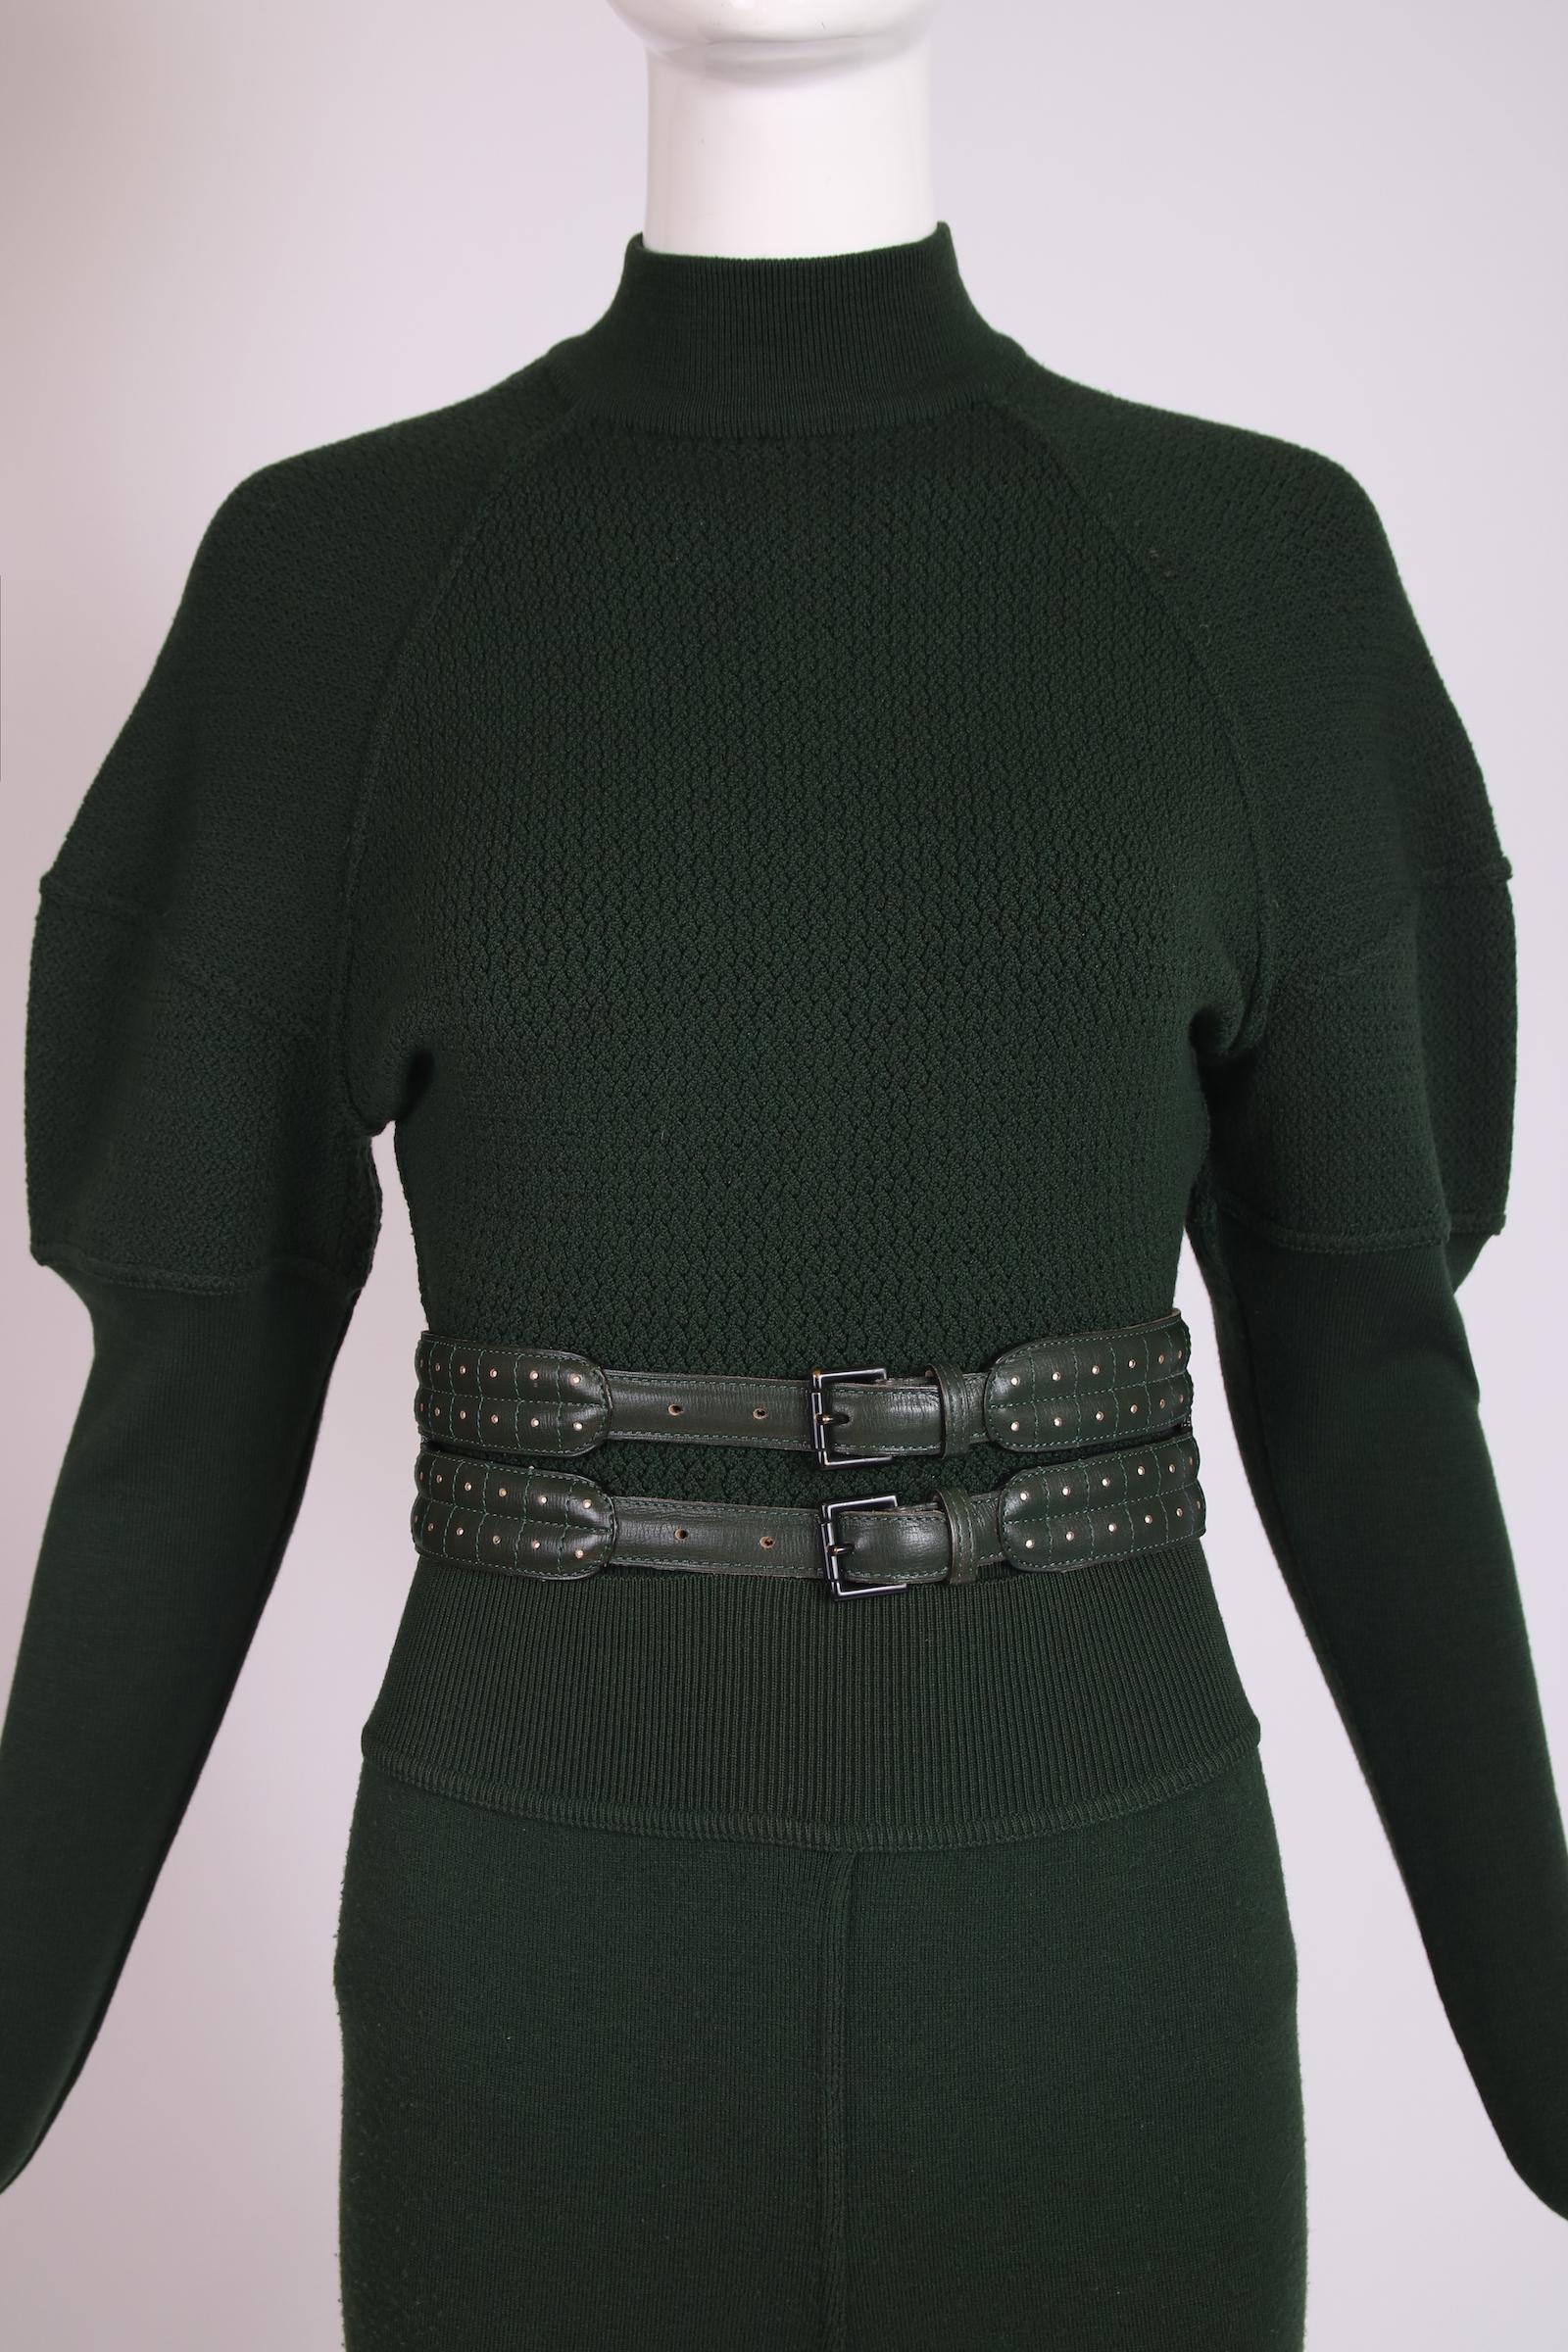 Noir Alaïa - Body en tricot vert, Leggings en étrier et ceinture en cuir assortie en vente